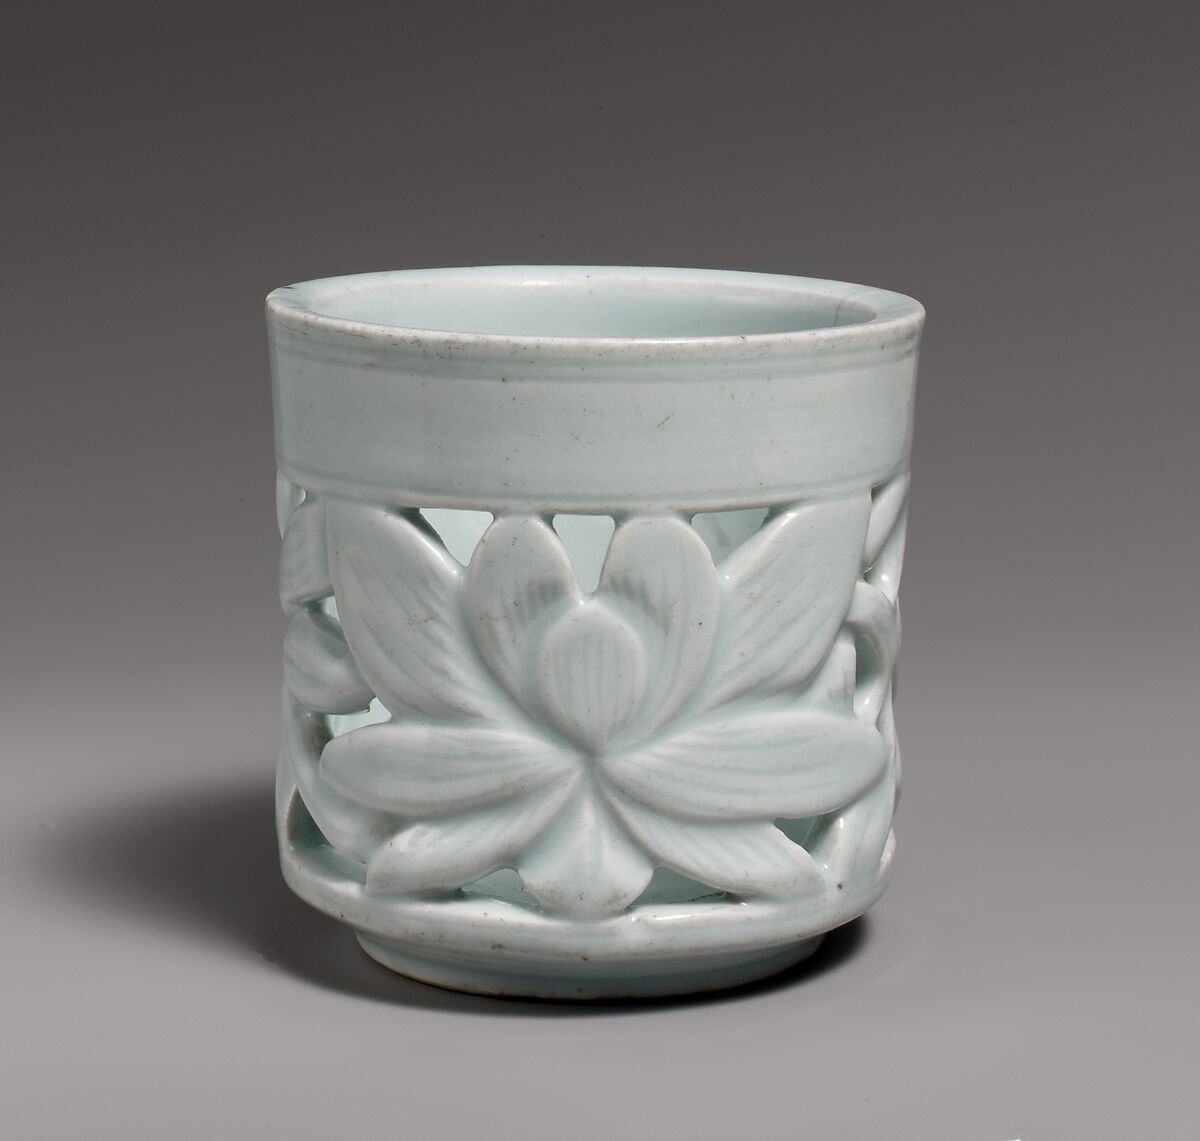 Brush holder with lotus decoration, Porcelain with openwork design, Korea 